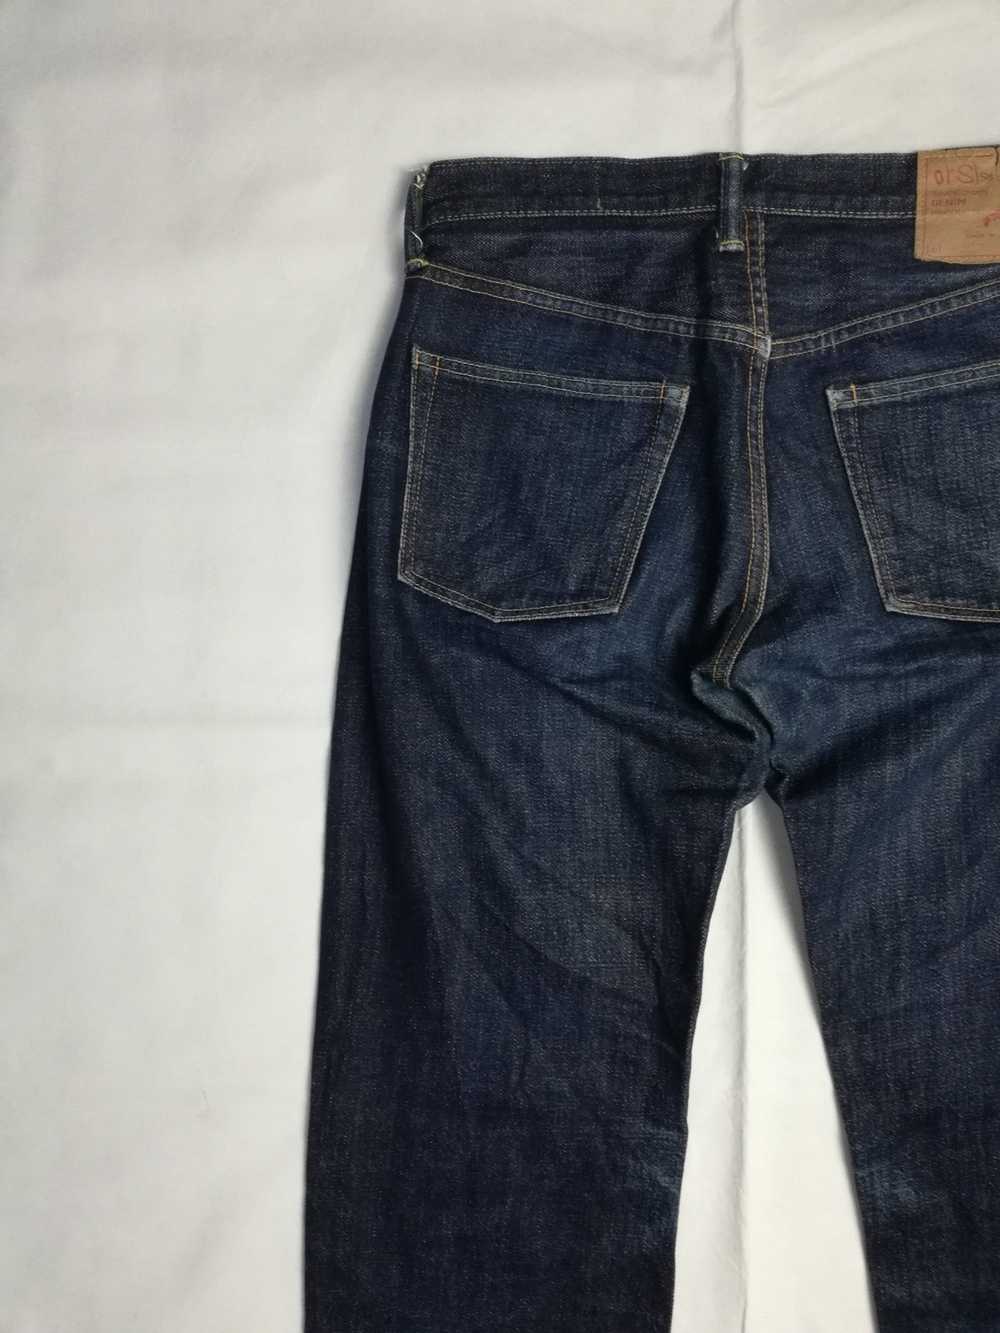 Orslow Orslow Selvedge Denim Jeans - image 7